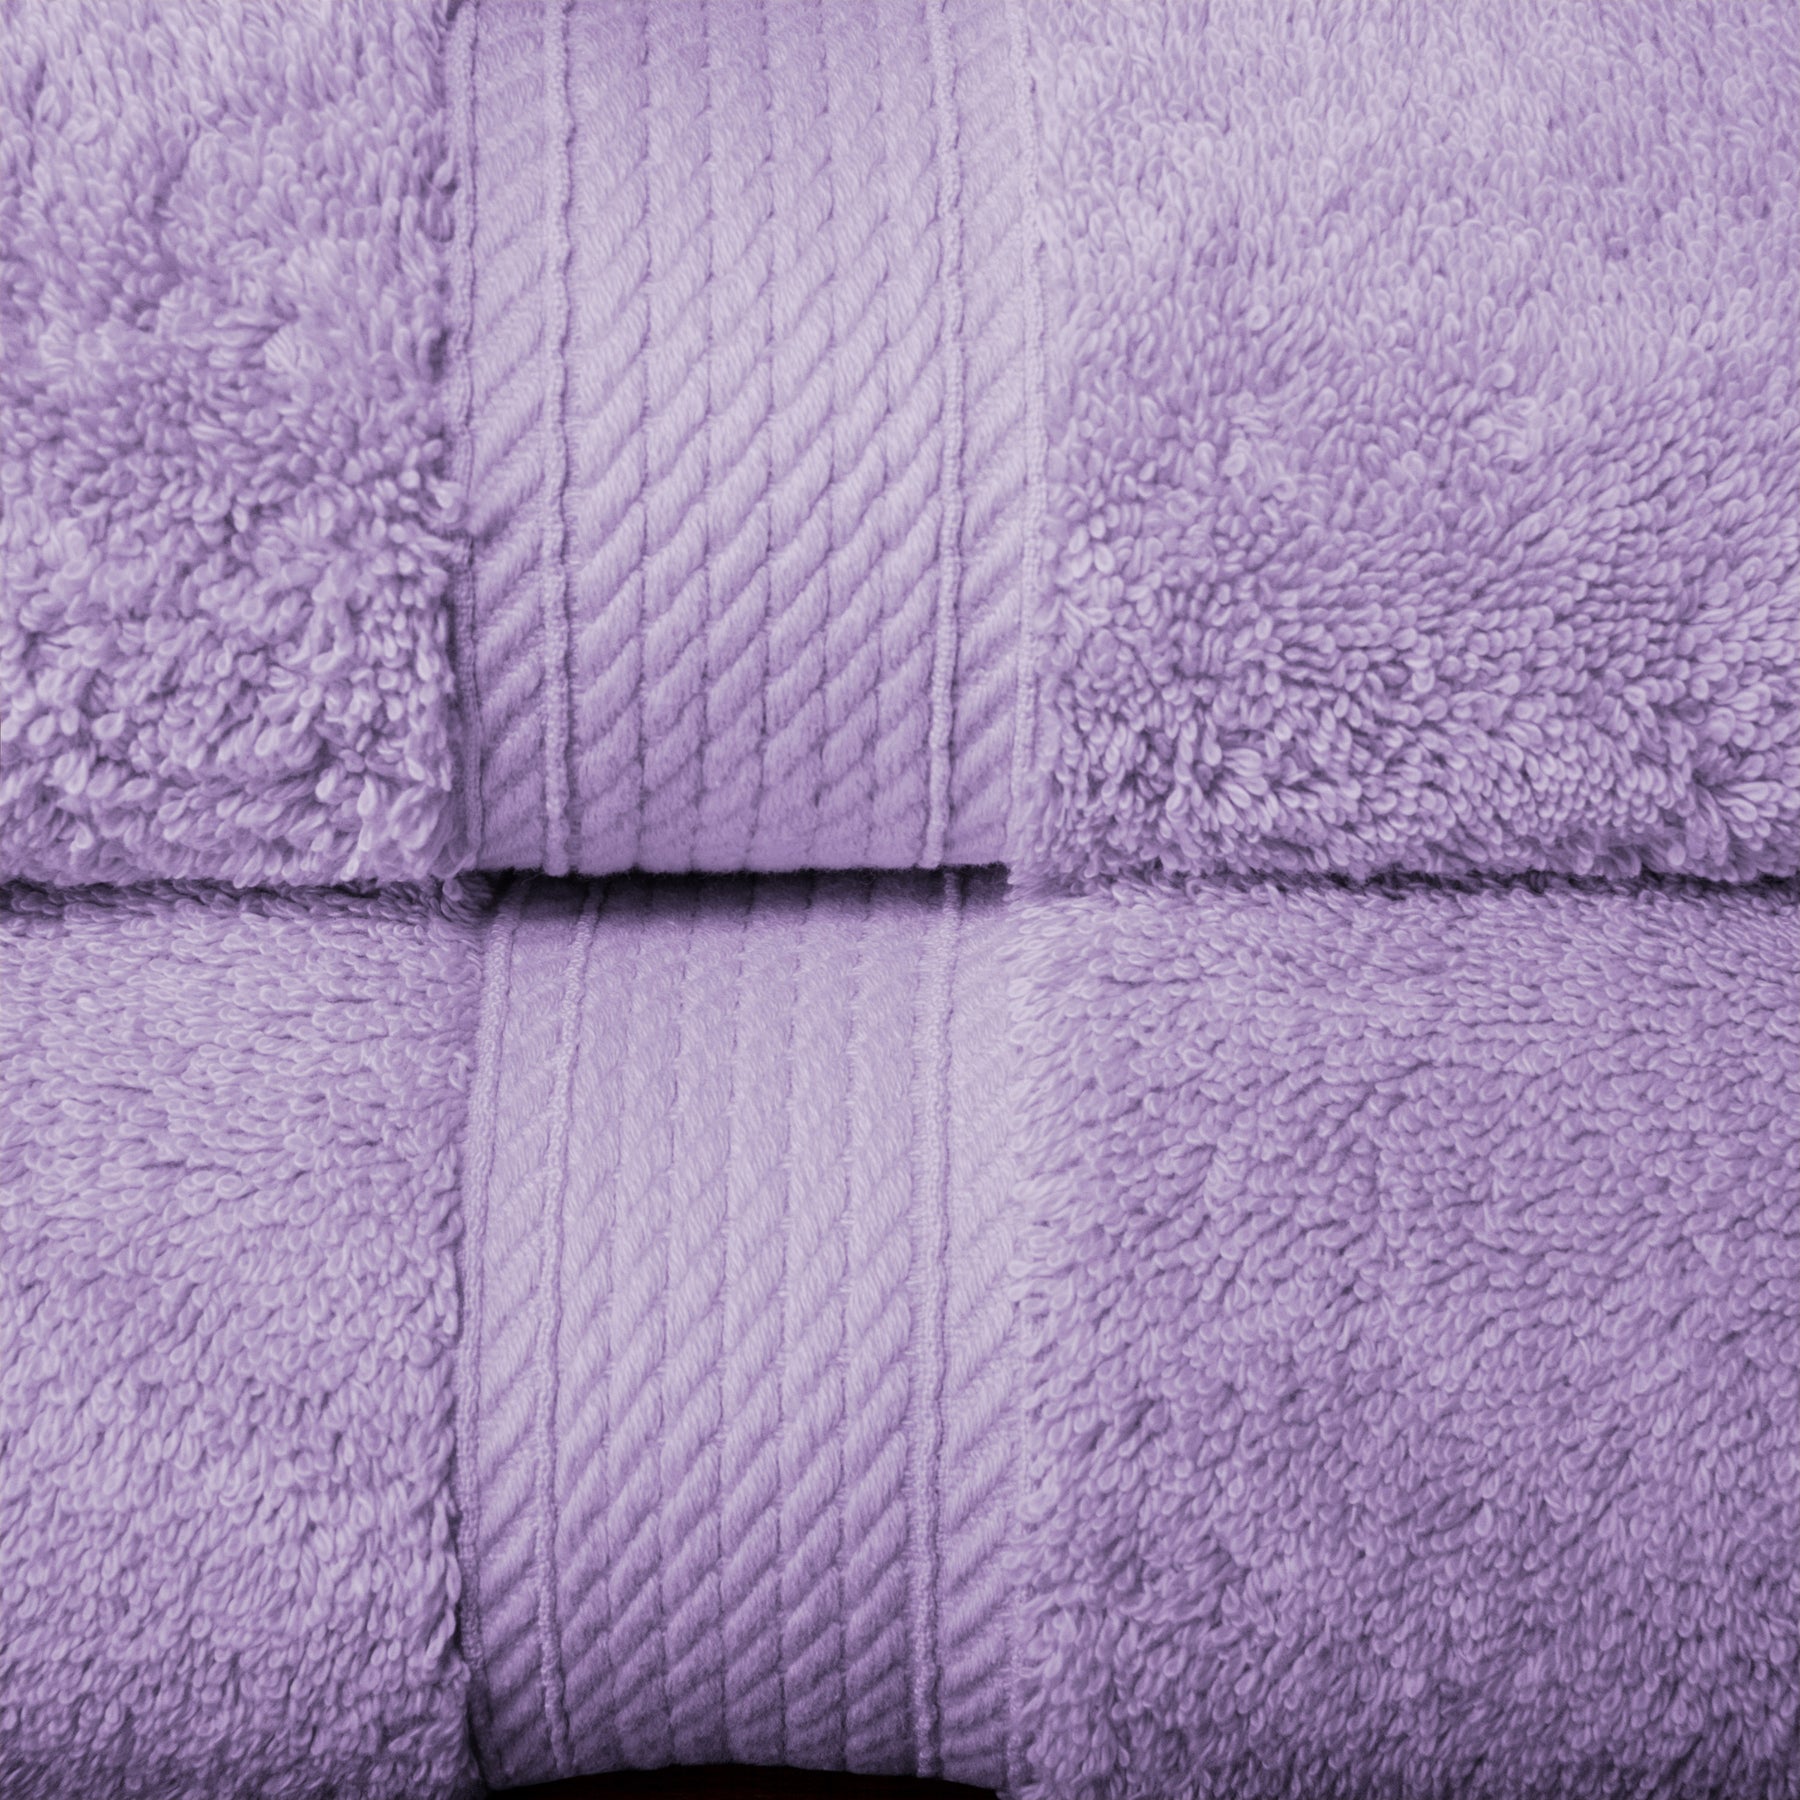 Egyptian Cotton Heavyweight 2 Piece Bath Towel Set - Purple